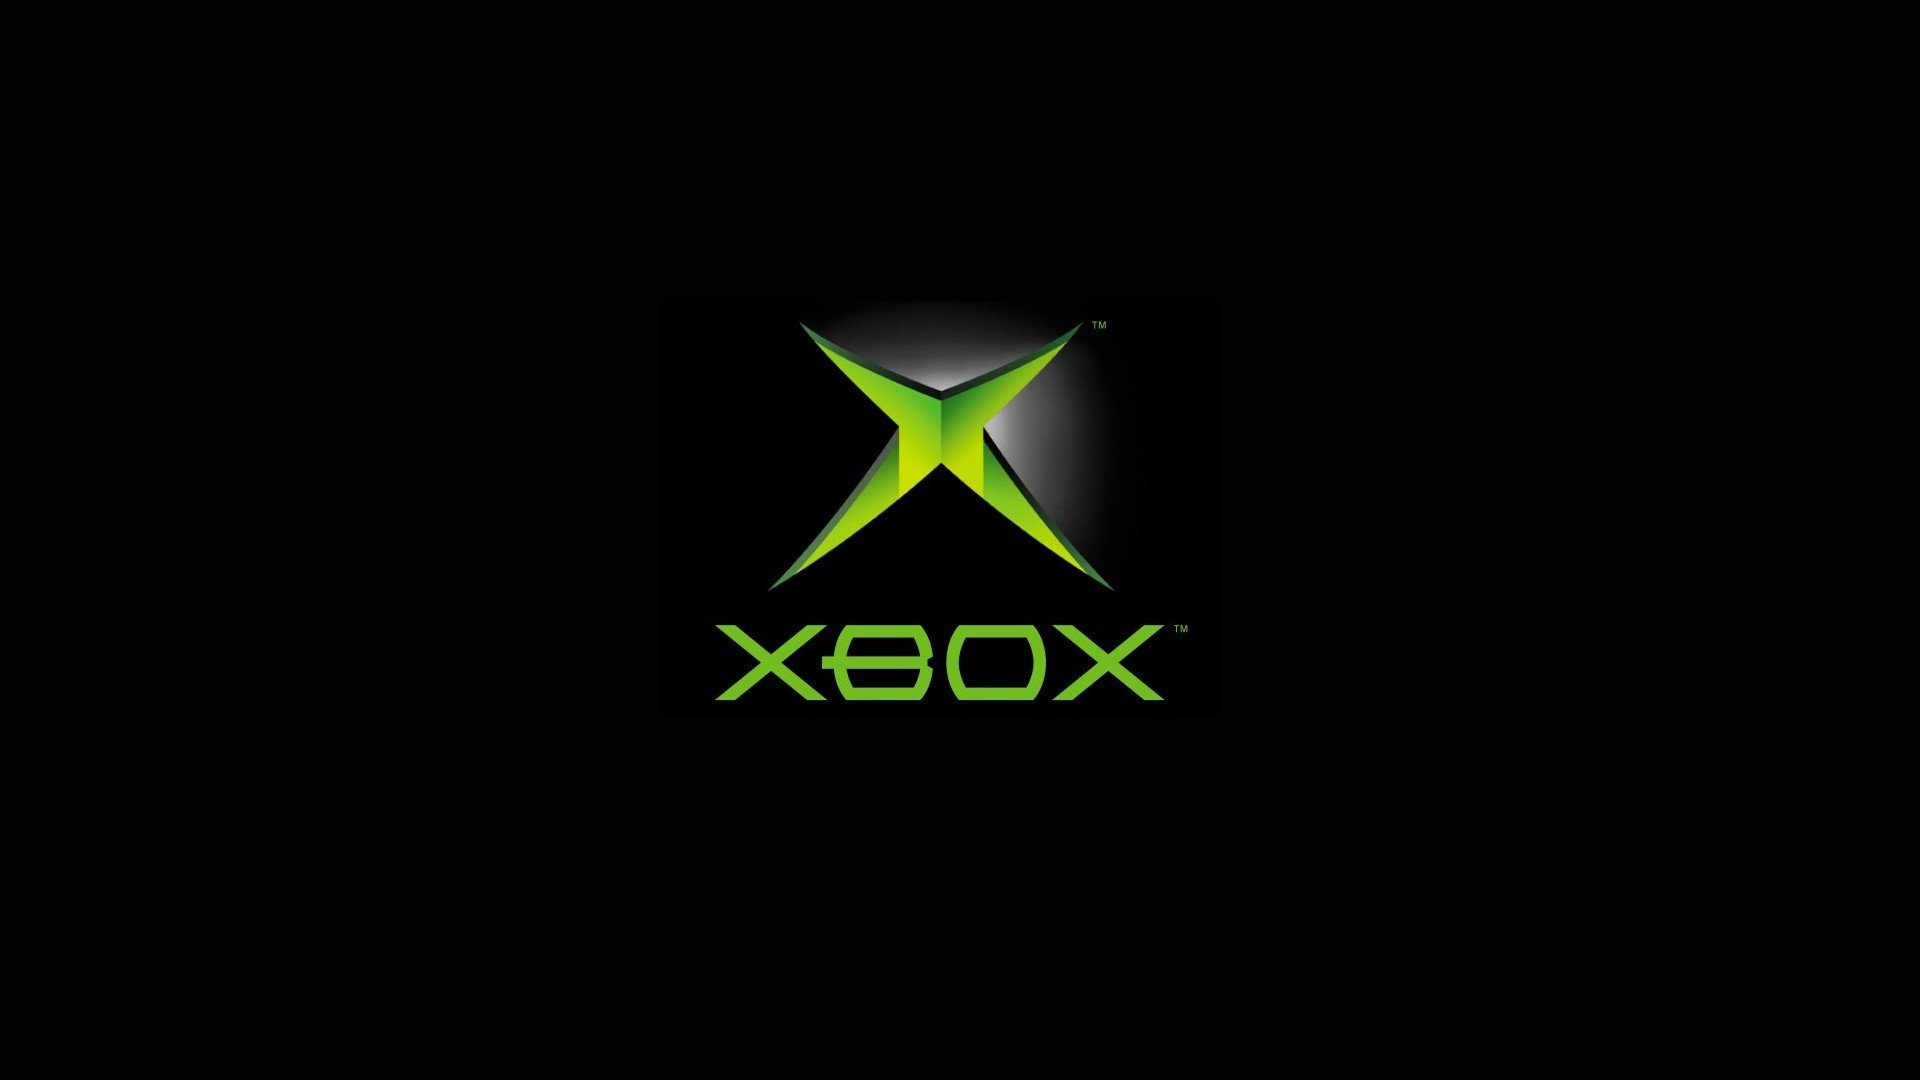 Xbox, Black background Wallpaper